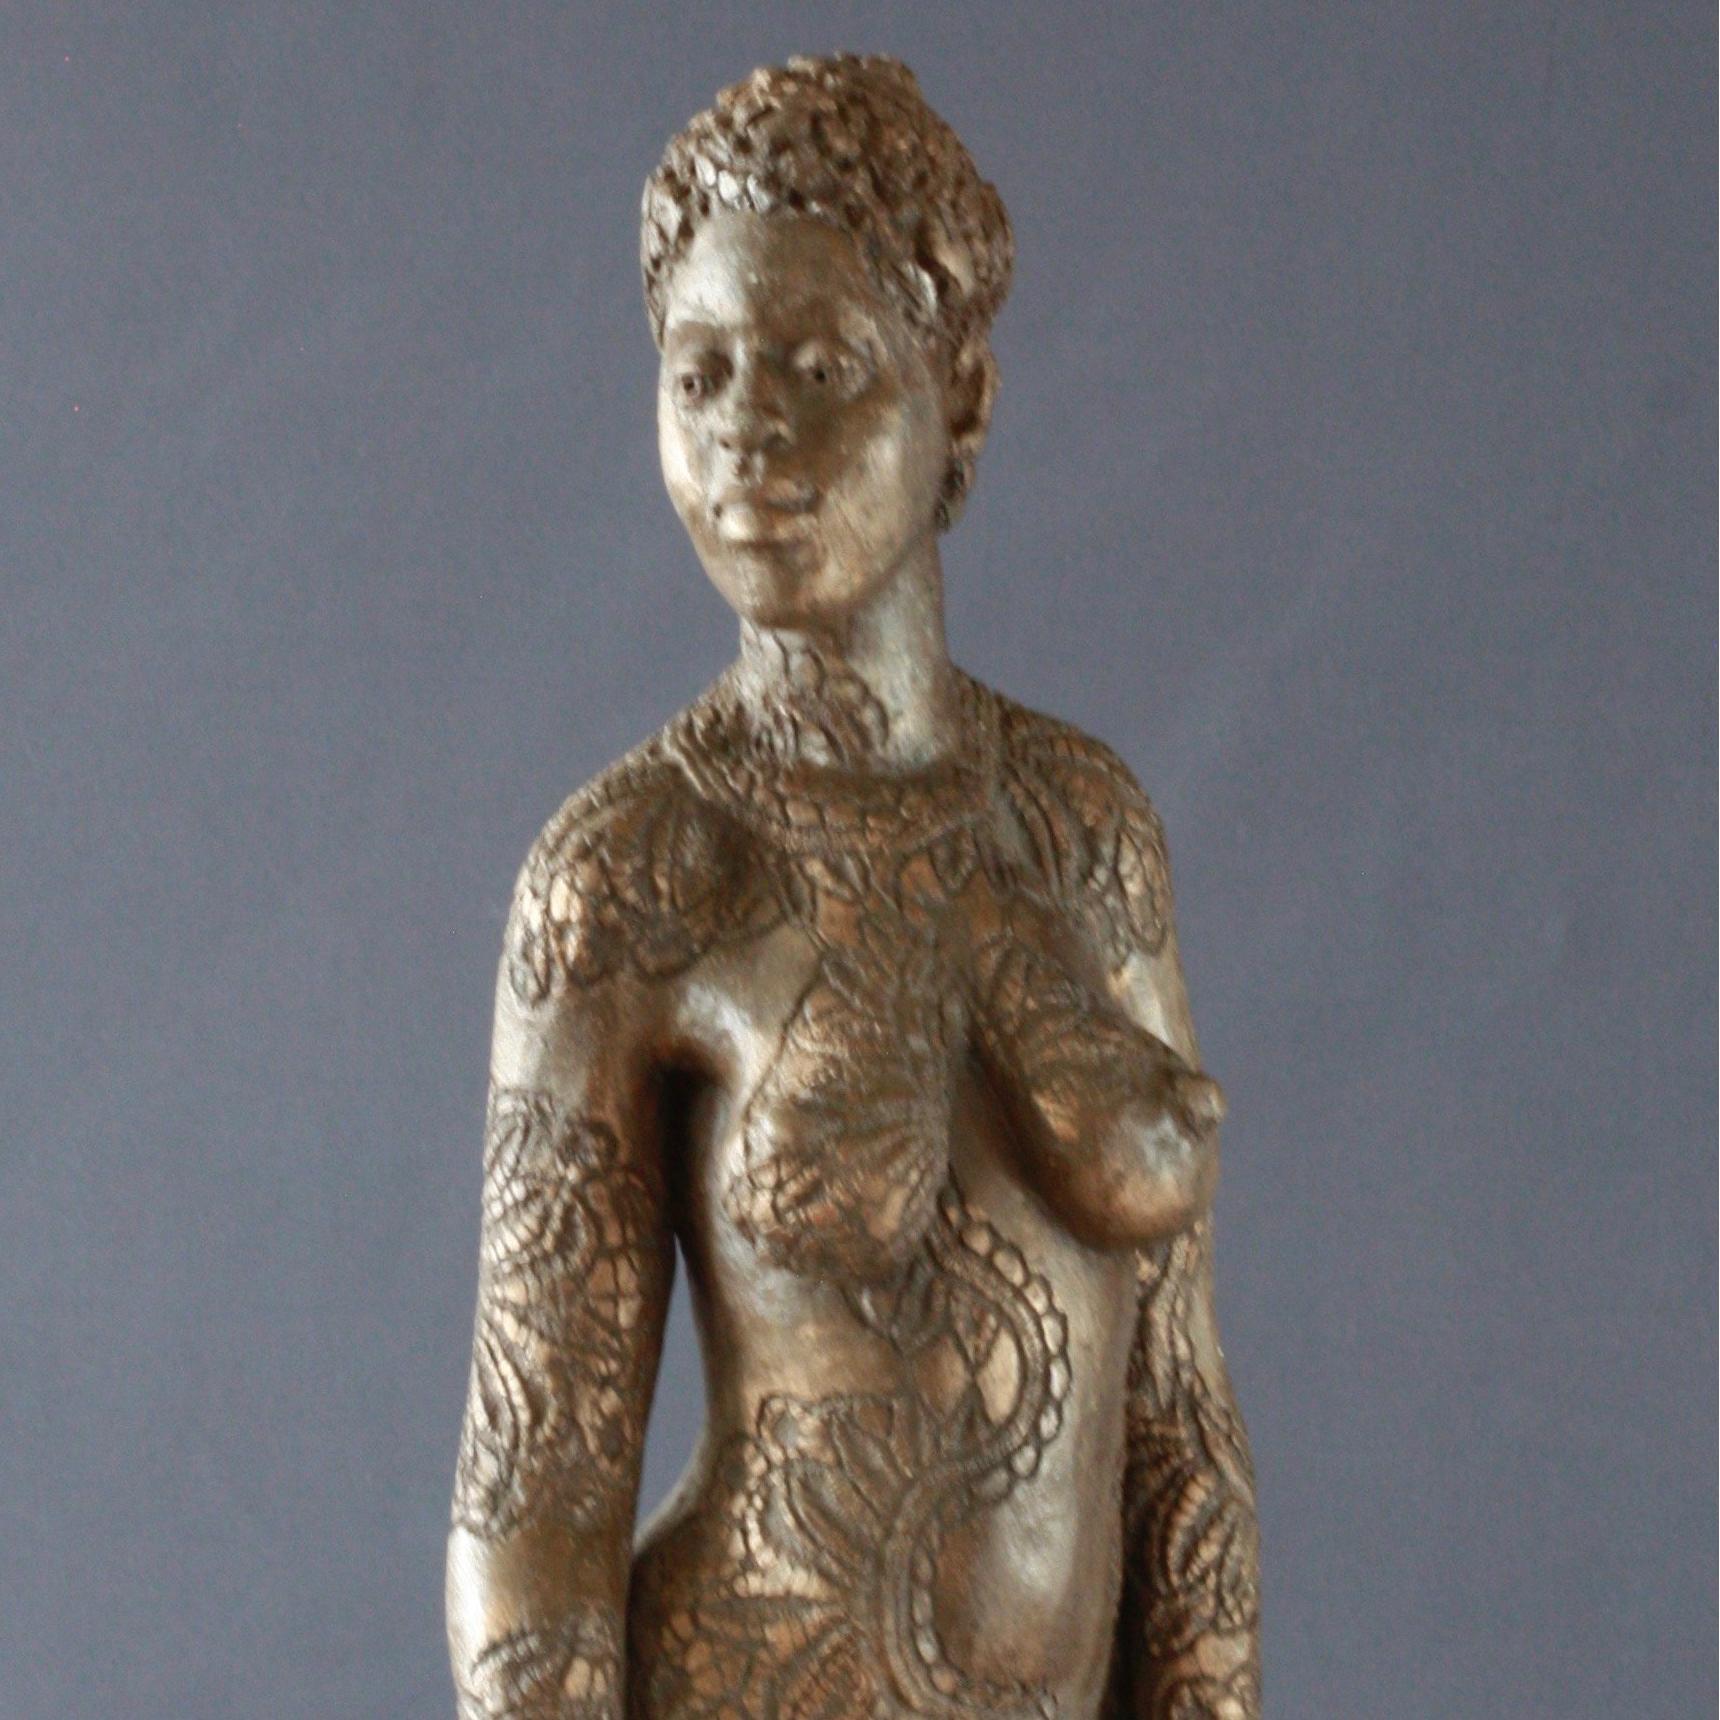 Mariama I. (Grau), Nude Sculpture, von Francine Auvrouin